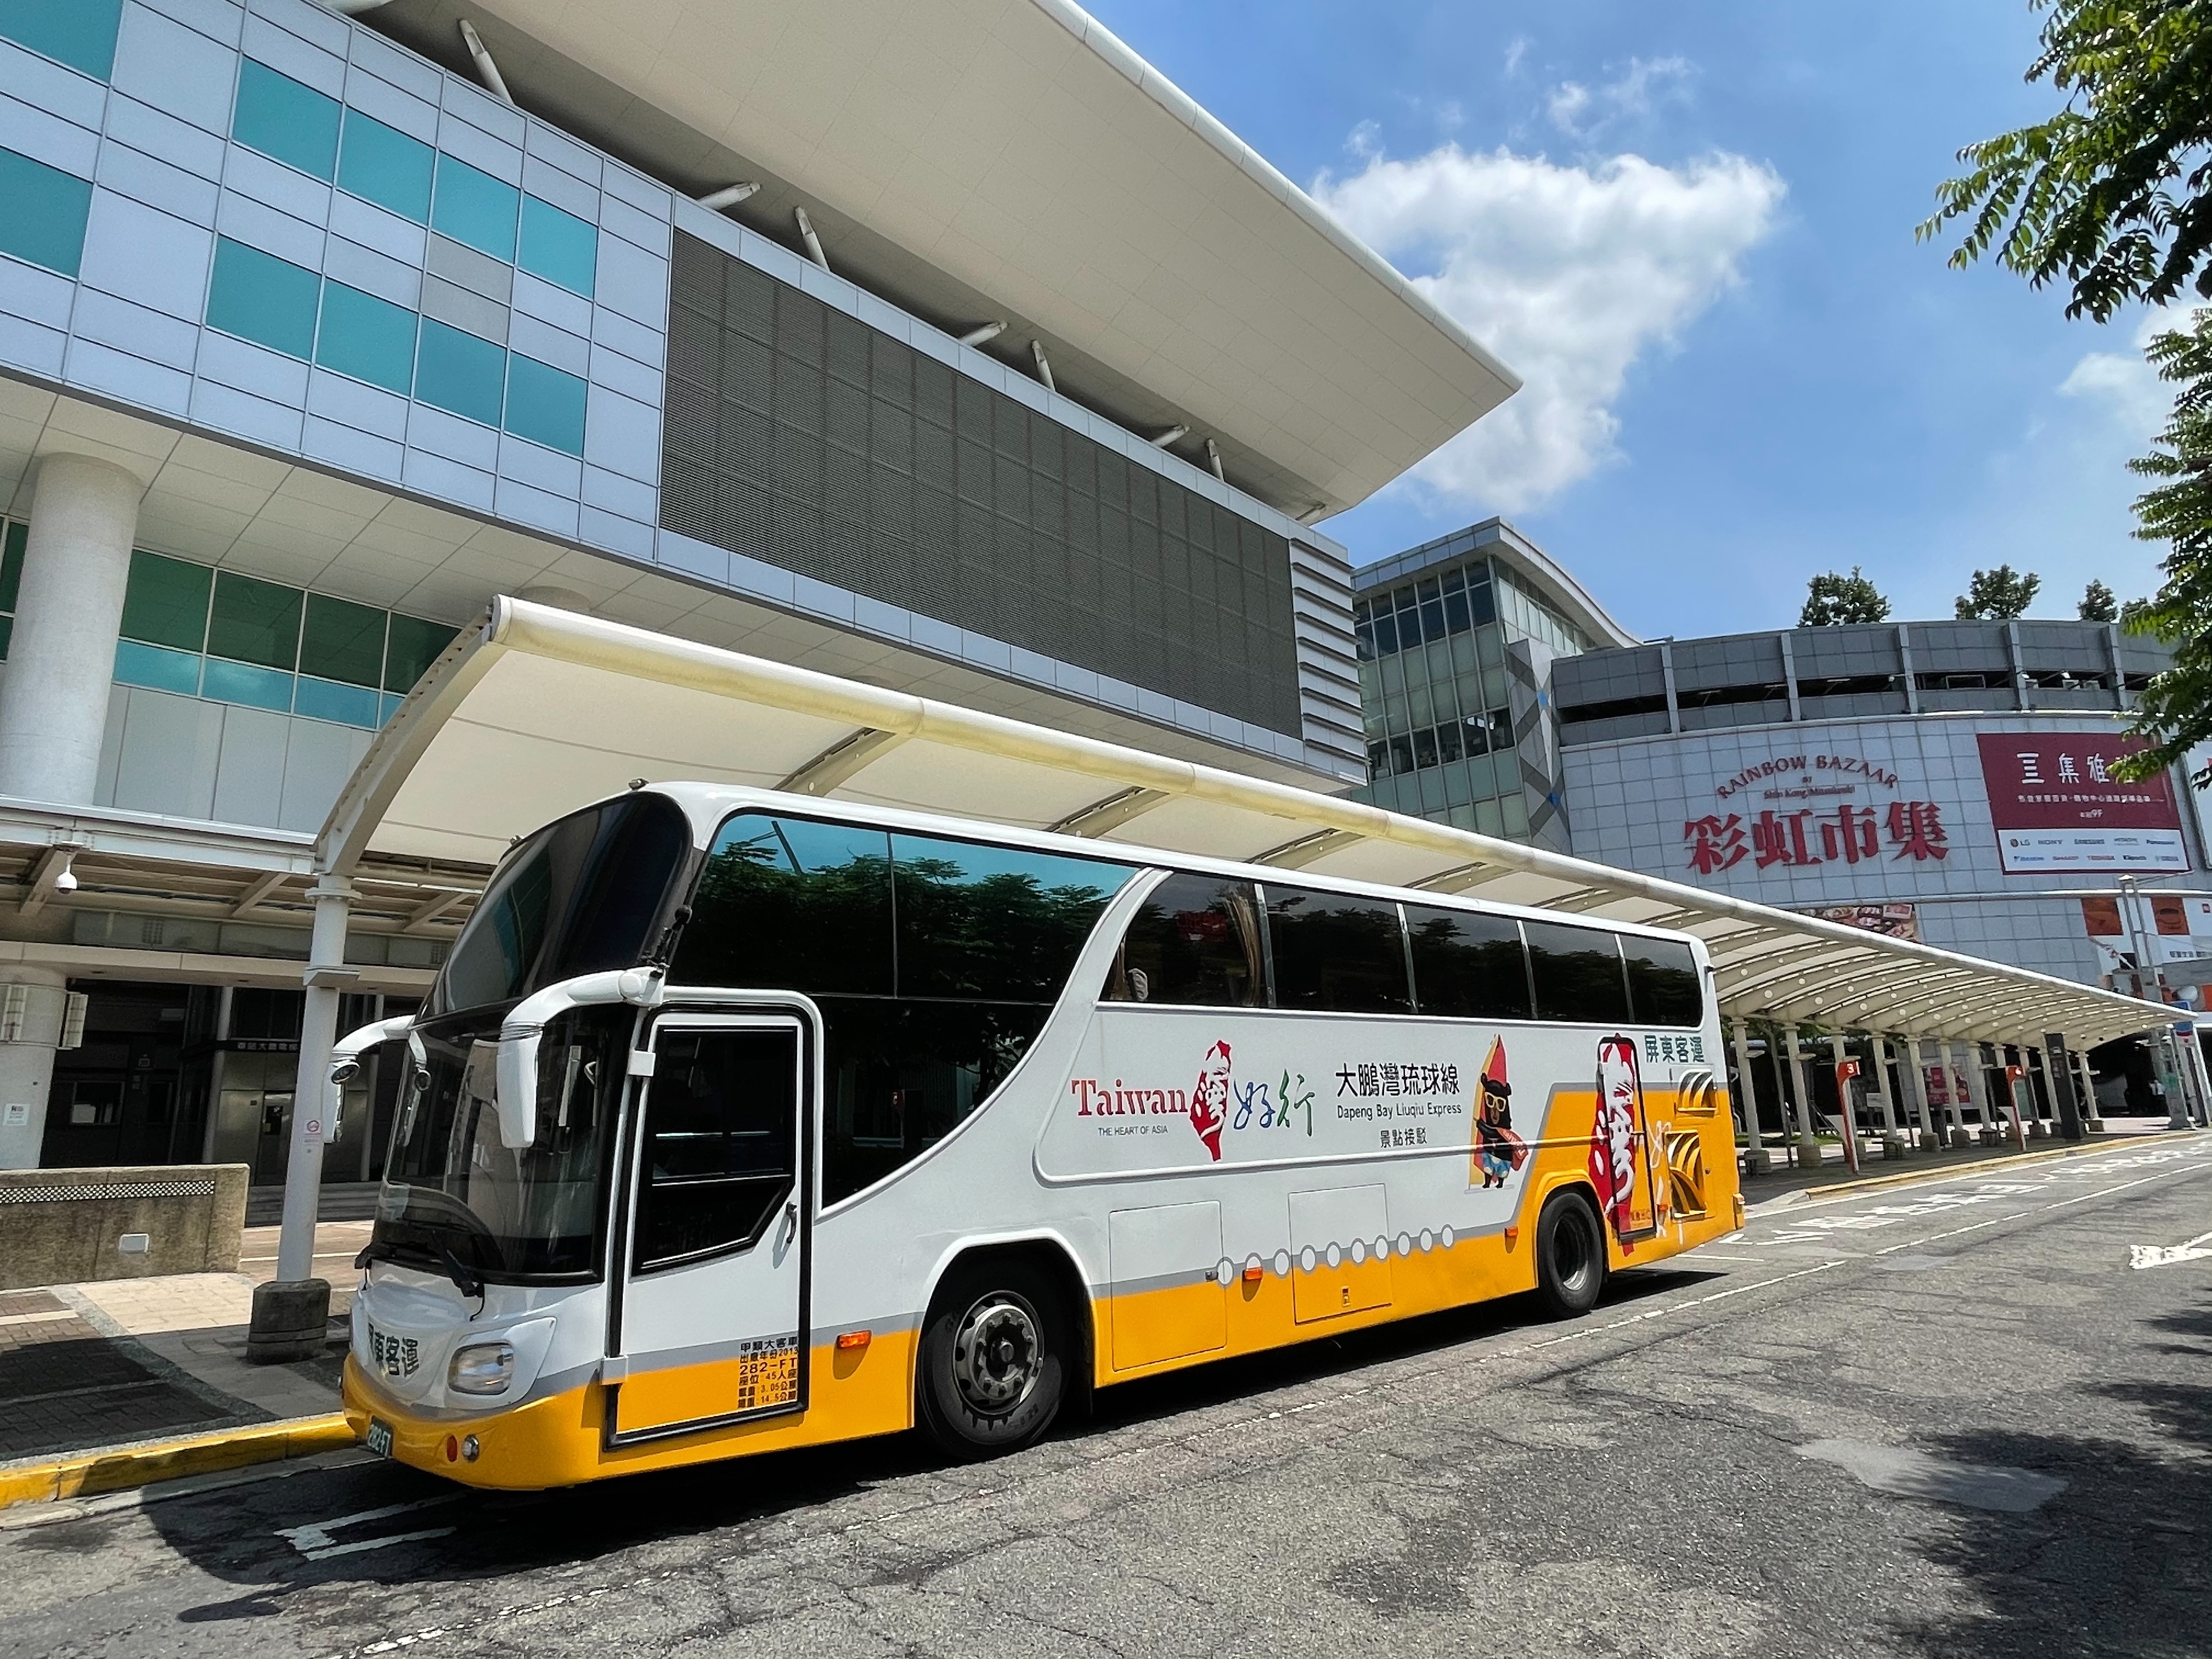 Pick-up point, Taiwan Tourist Shuttle